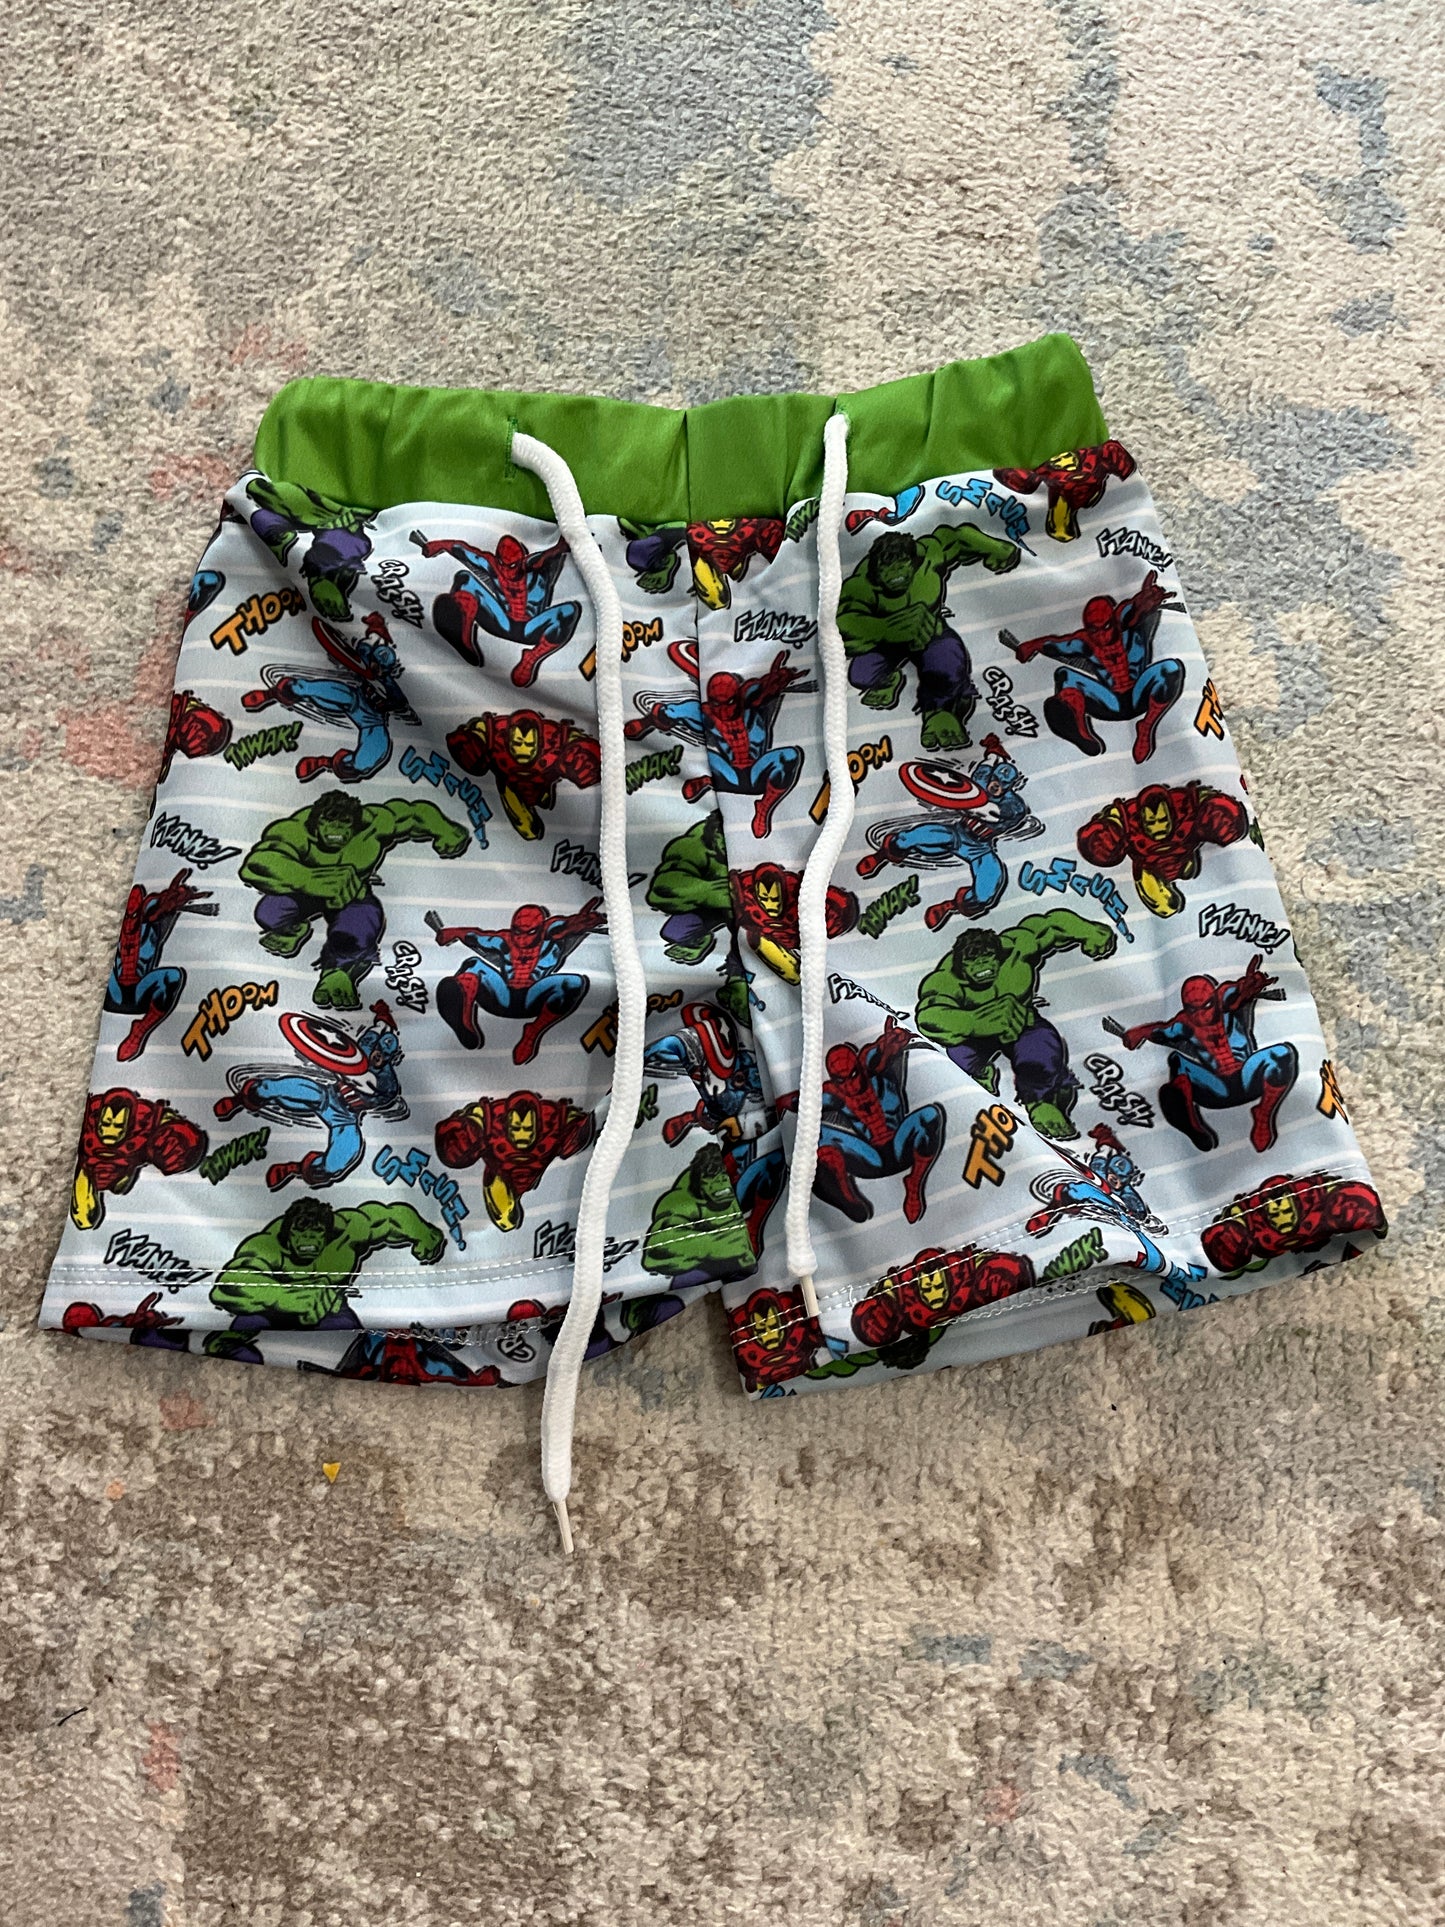 Rts- superhero trunks